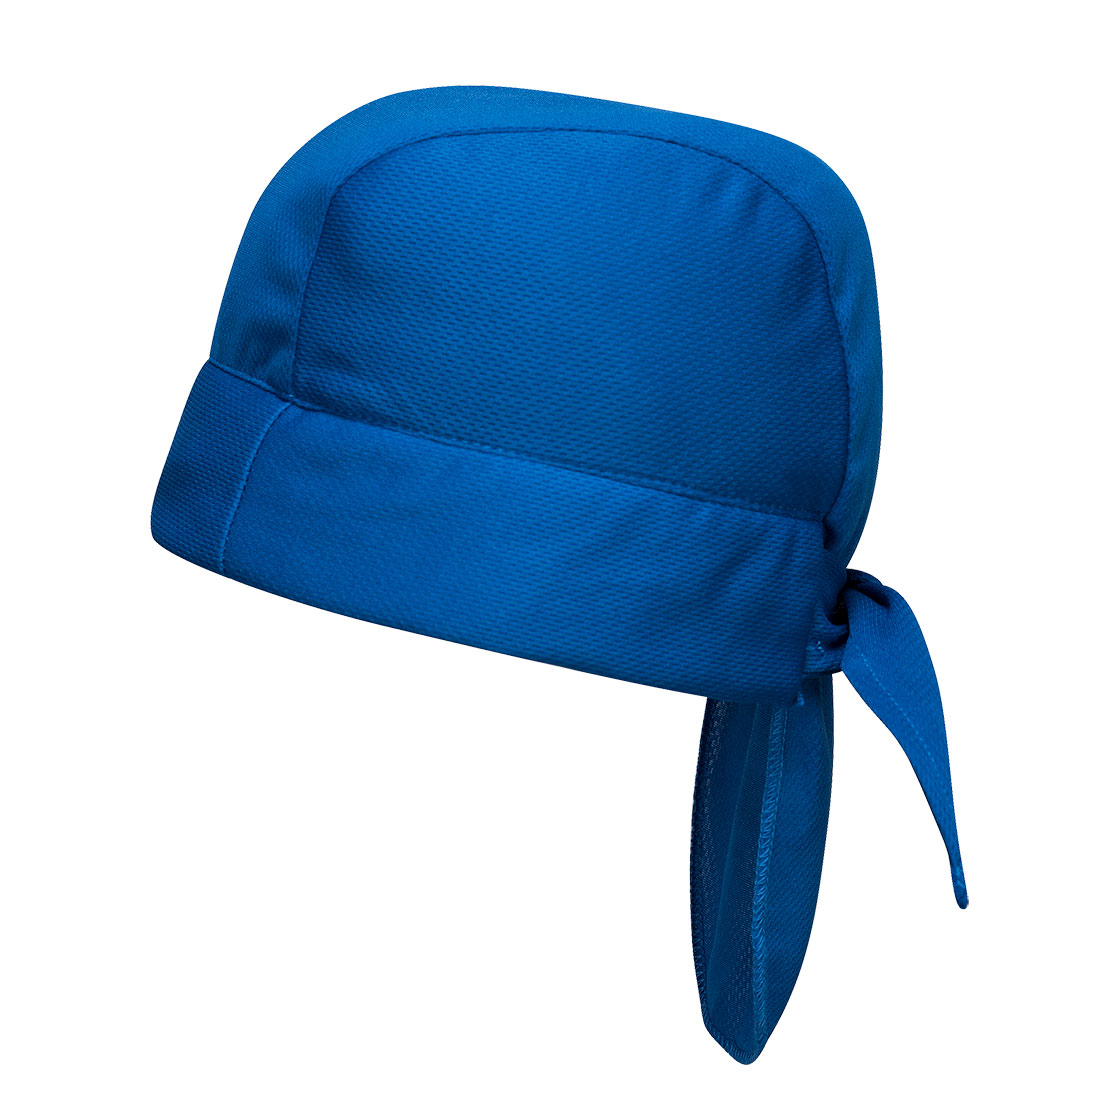 Cooling Head Band - Blue